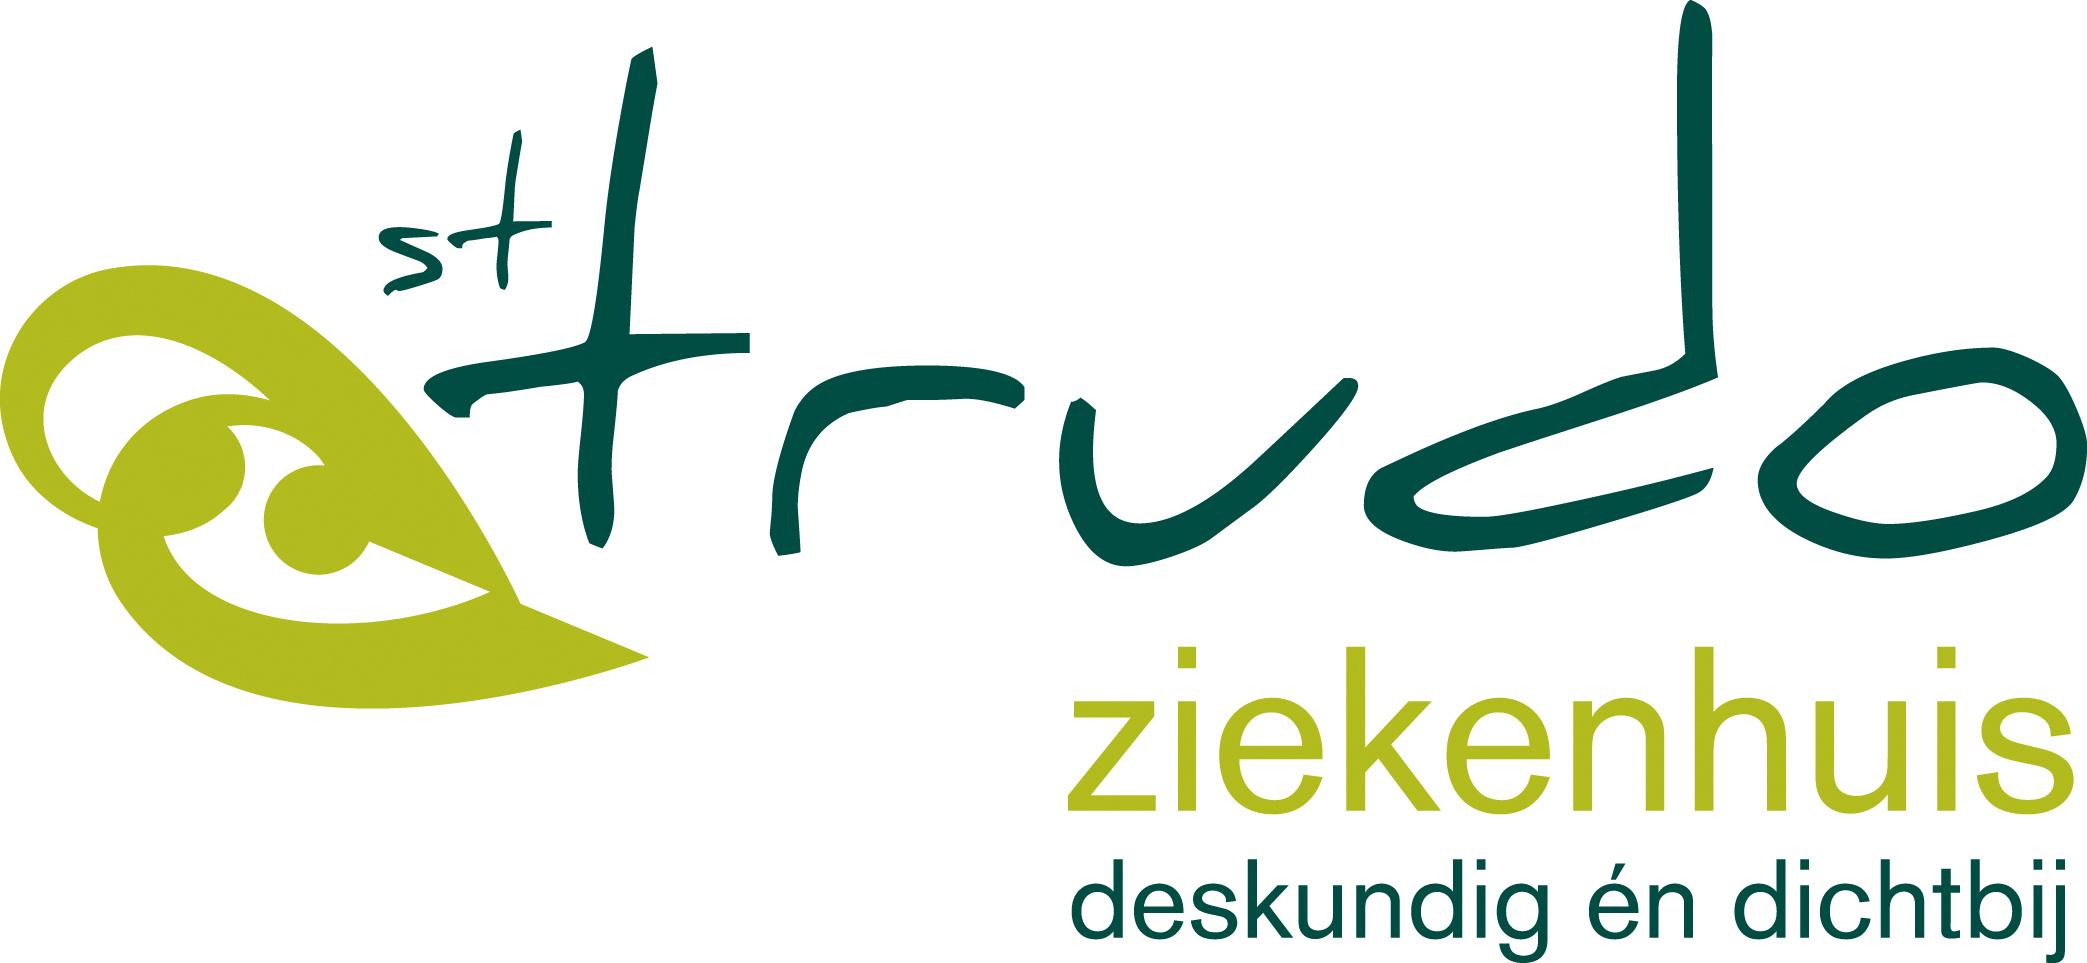 Sint-Trudo Ziekenhuis (logo)